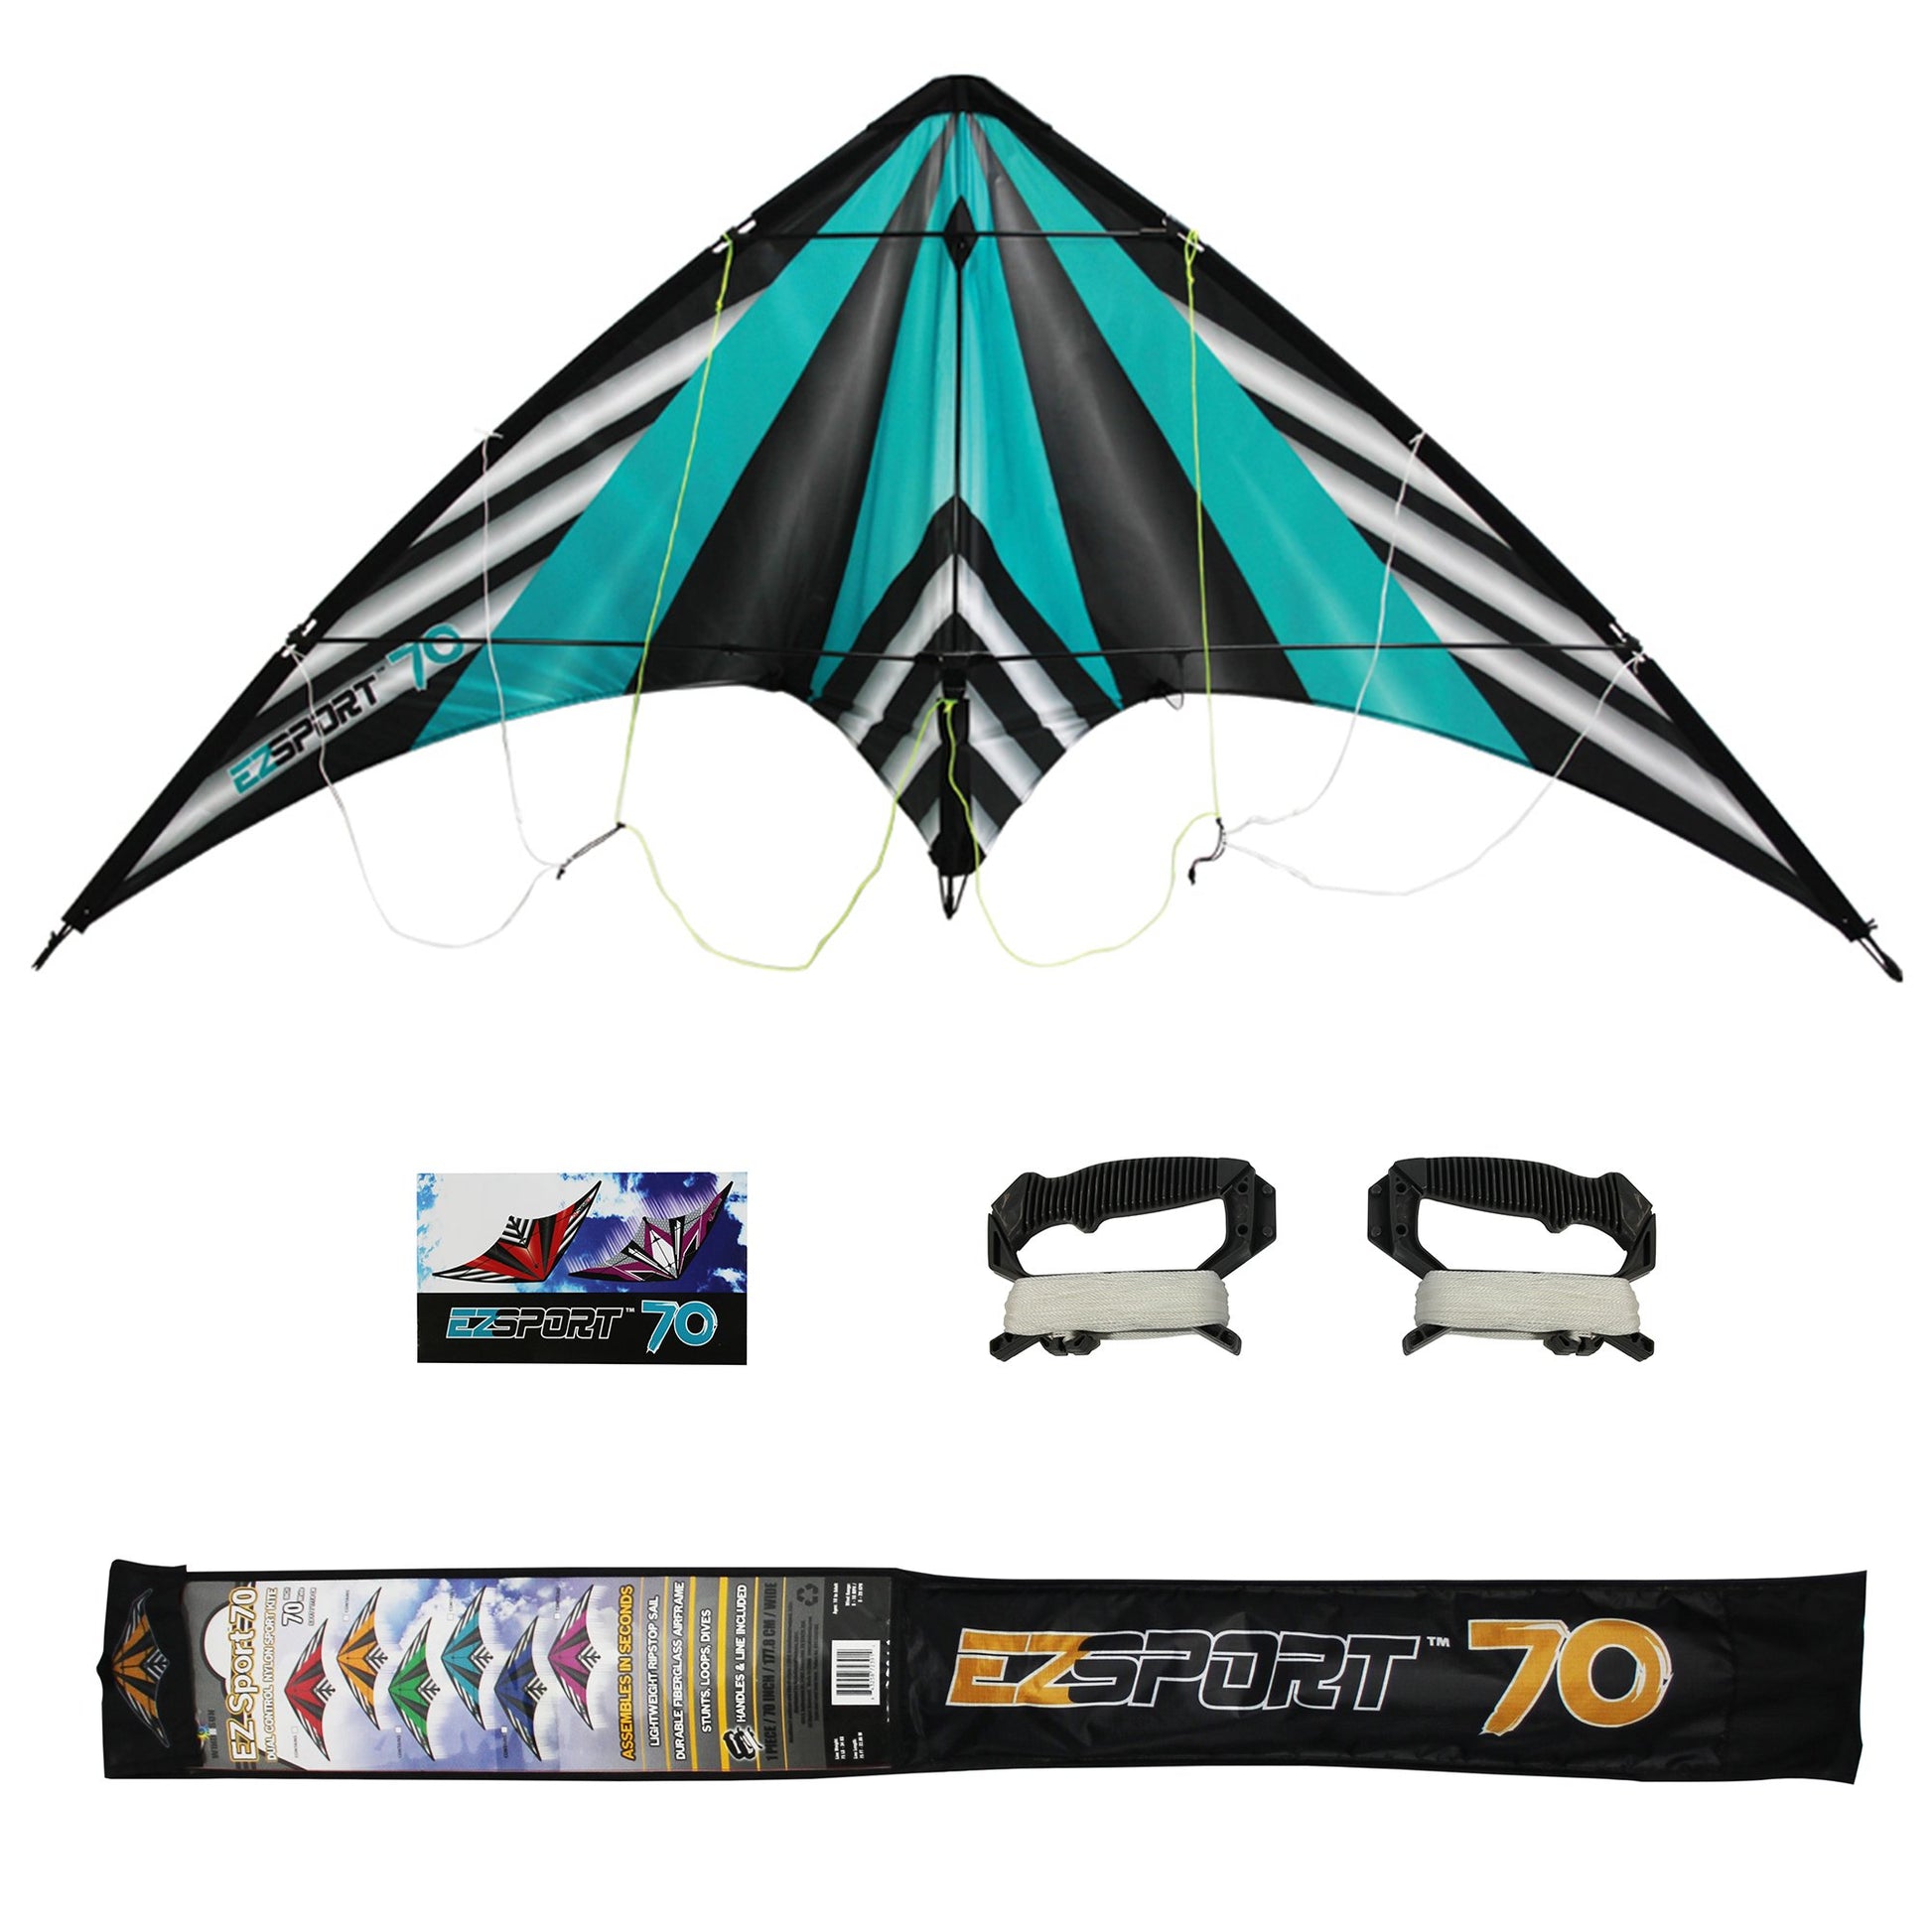 WindNSun EZ Sport 70 Dual Control Sport Kite Teal Stripe Nylon Kite photo showing handle